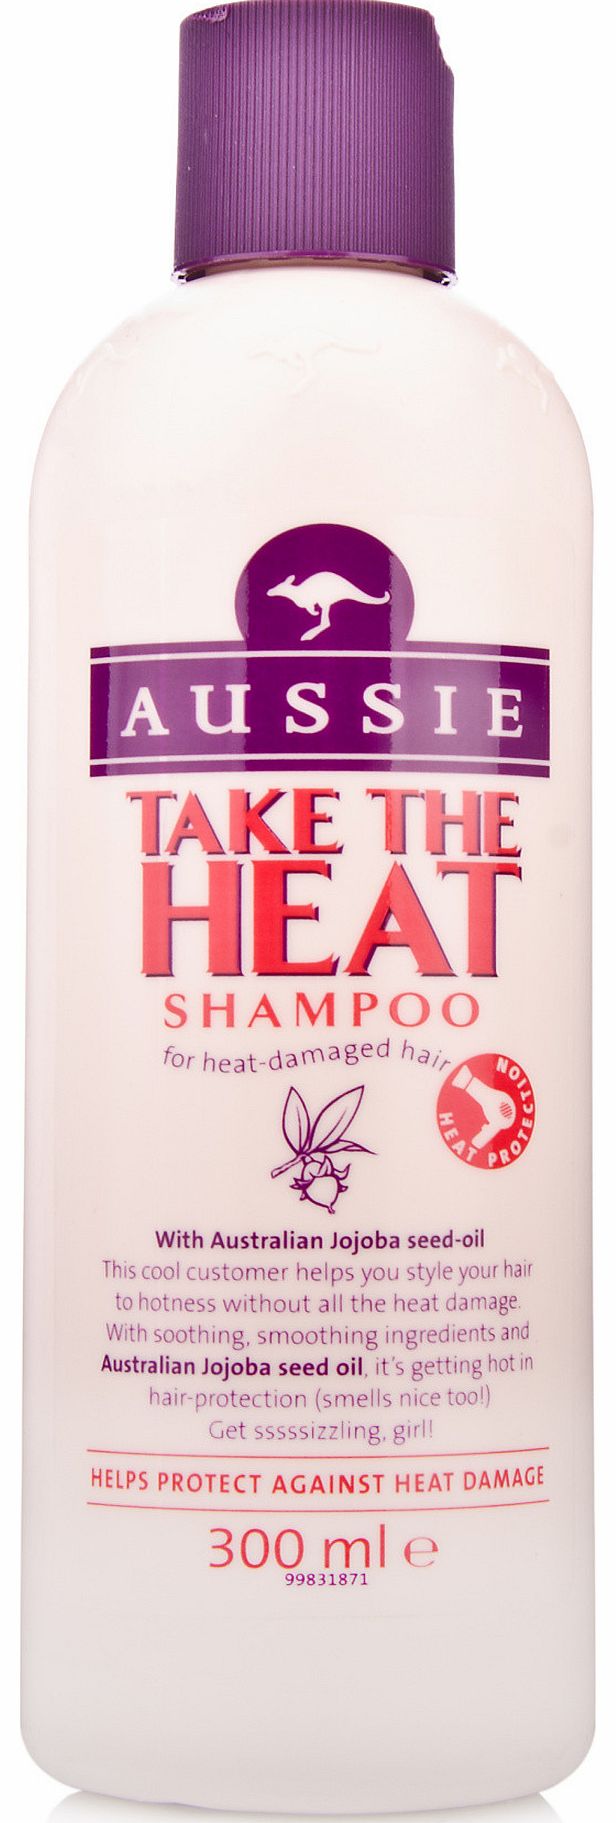 Aussie Take The Heat Shampoo